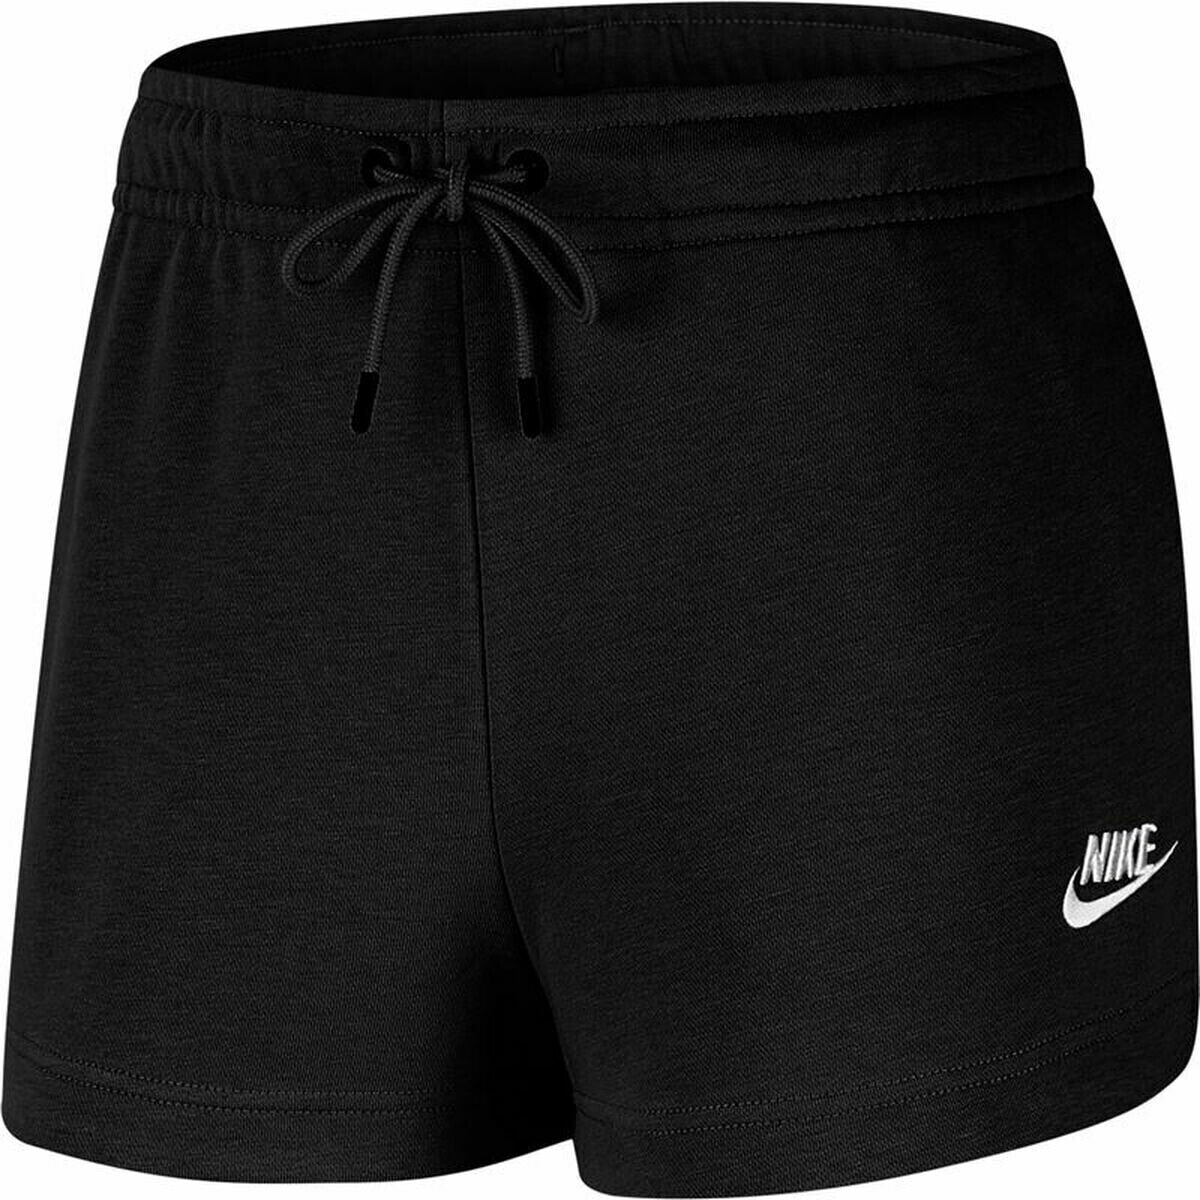 Sports Shorts for Women Nike Essential Black